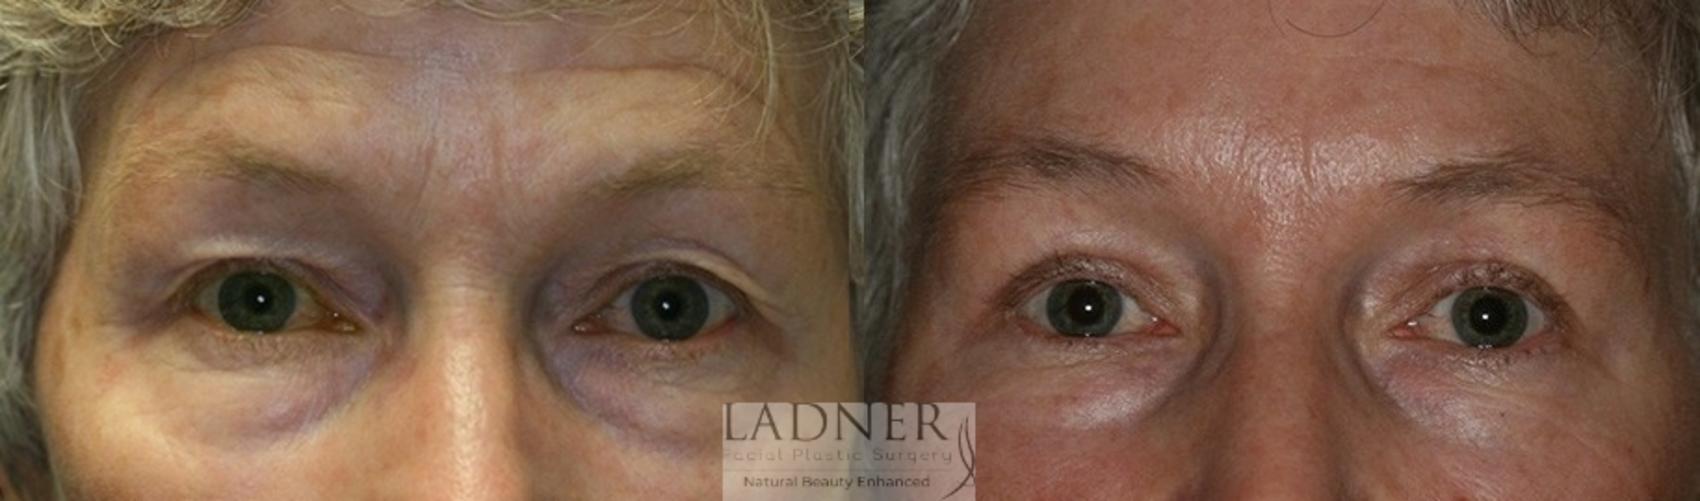 Eyelid Surgery (blepharoplasty) Case 49 Before & After Front | Denver, CO | Ladner Facial Plastic Surgery